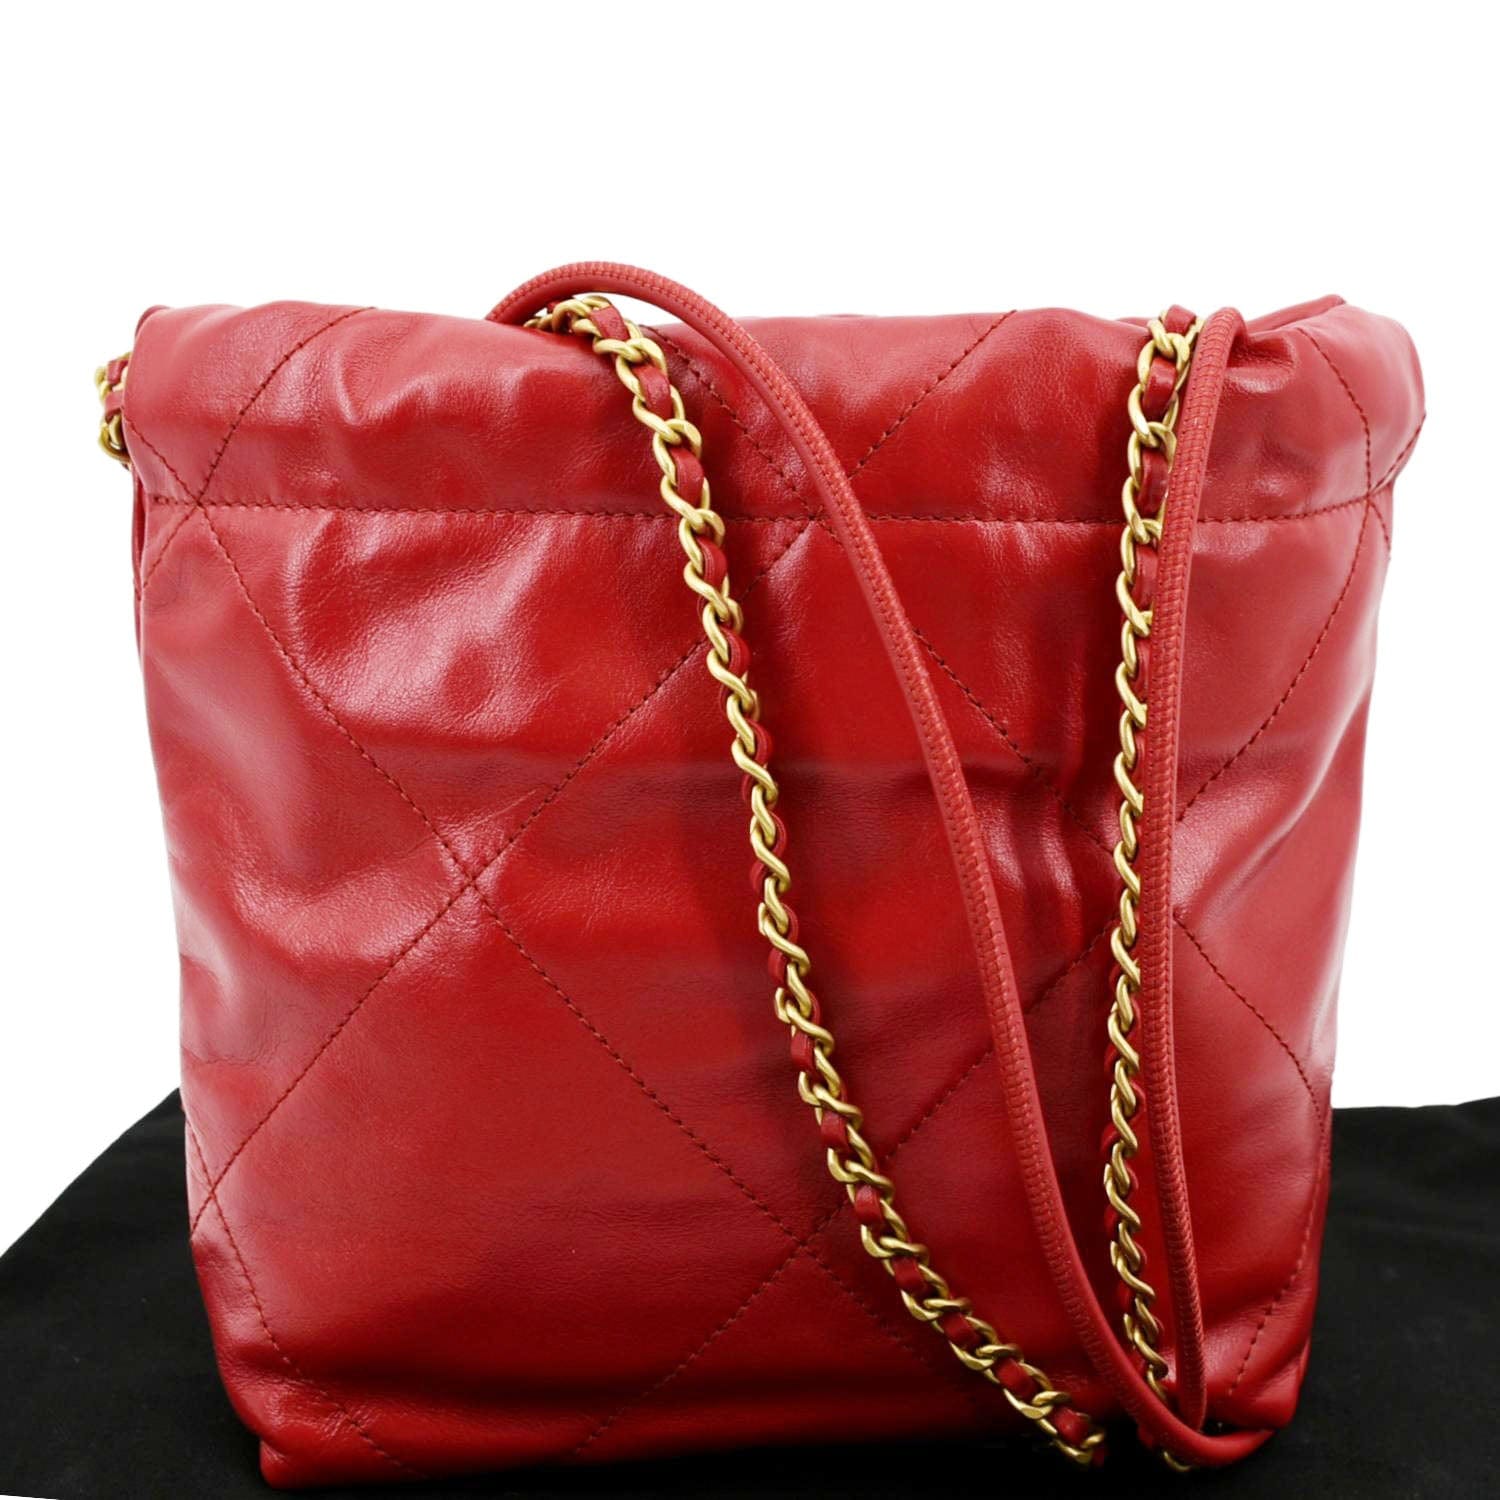 Chanel 22 metallic grey bag small size, Luxury, Bags & Wallets on